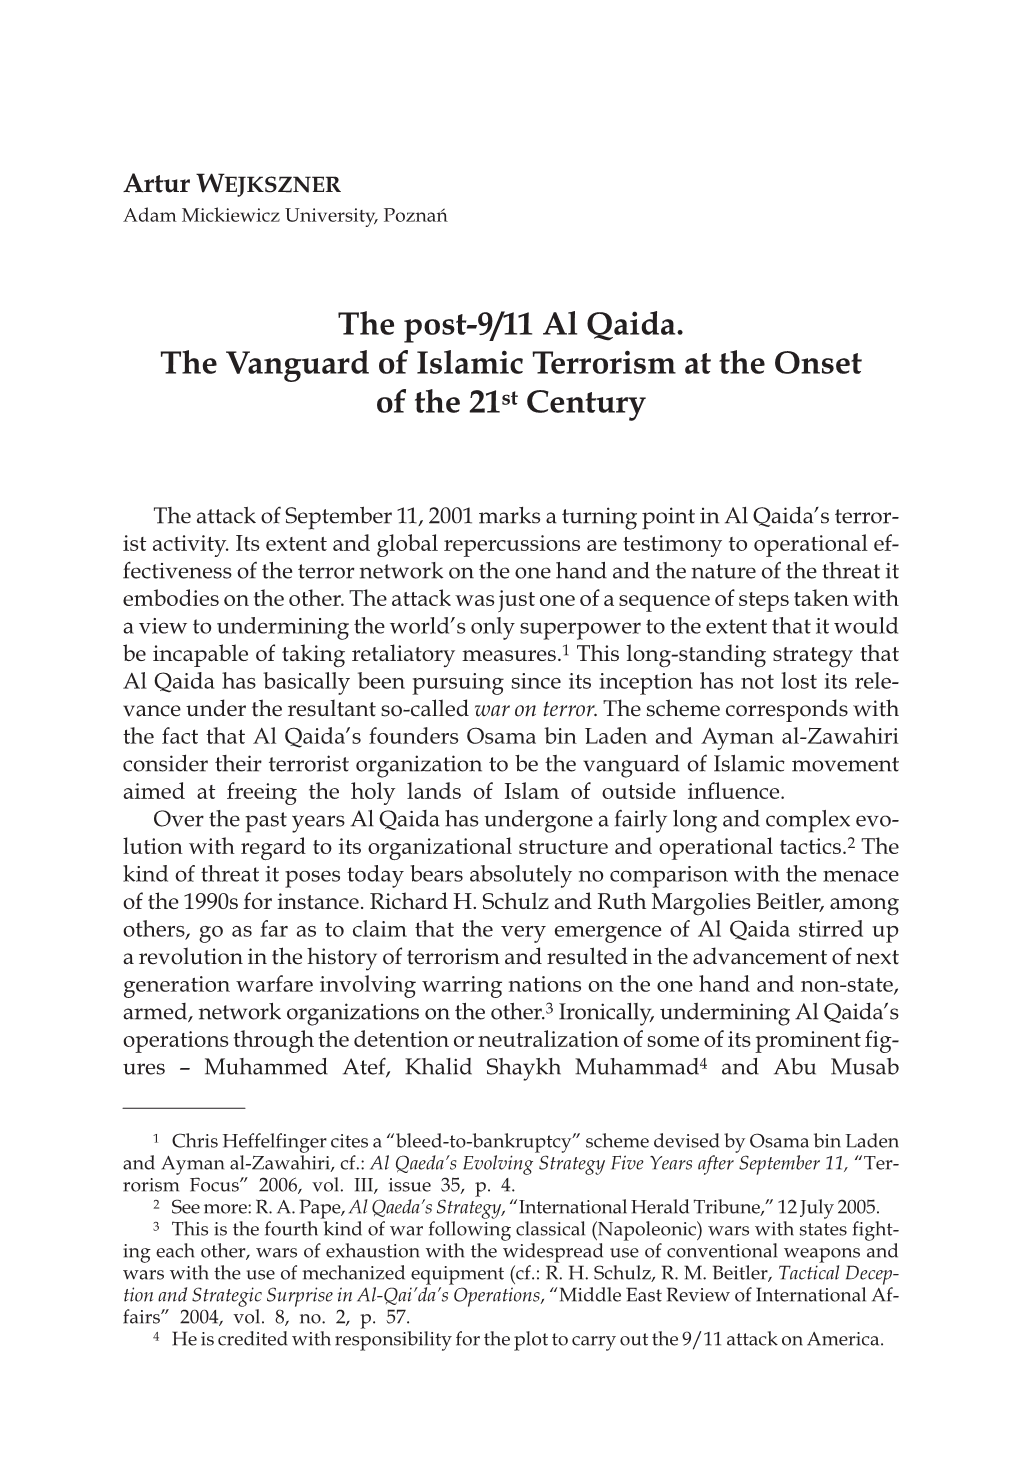 The Post-9/11 Al Qaida. the Vanguard of Islamic Terrorism at the Onset of the 21St Century